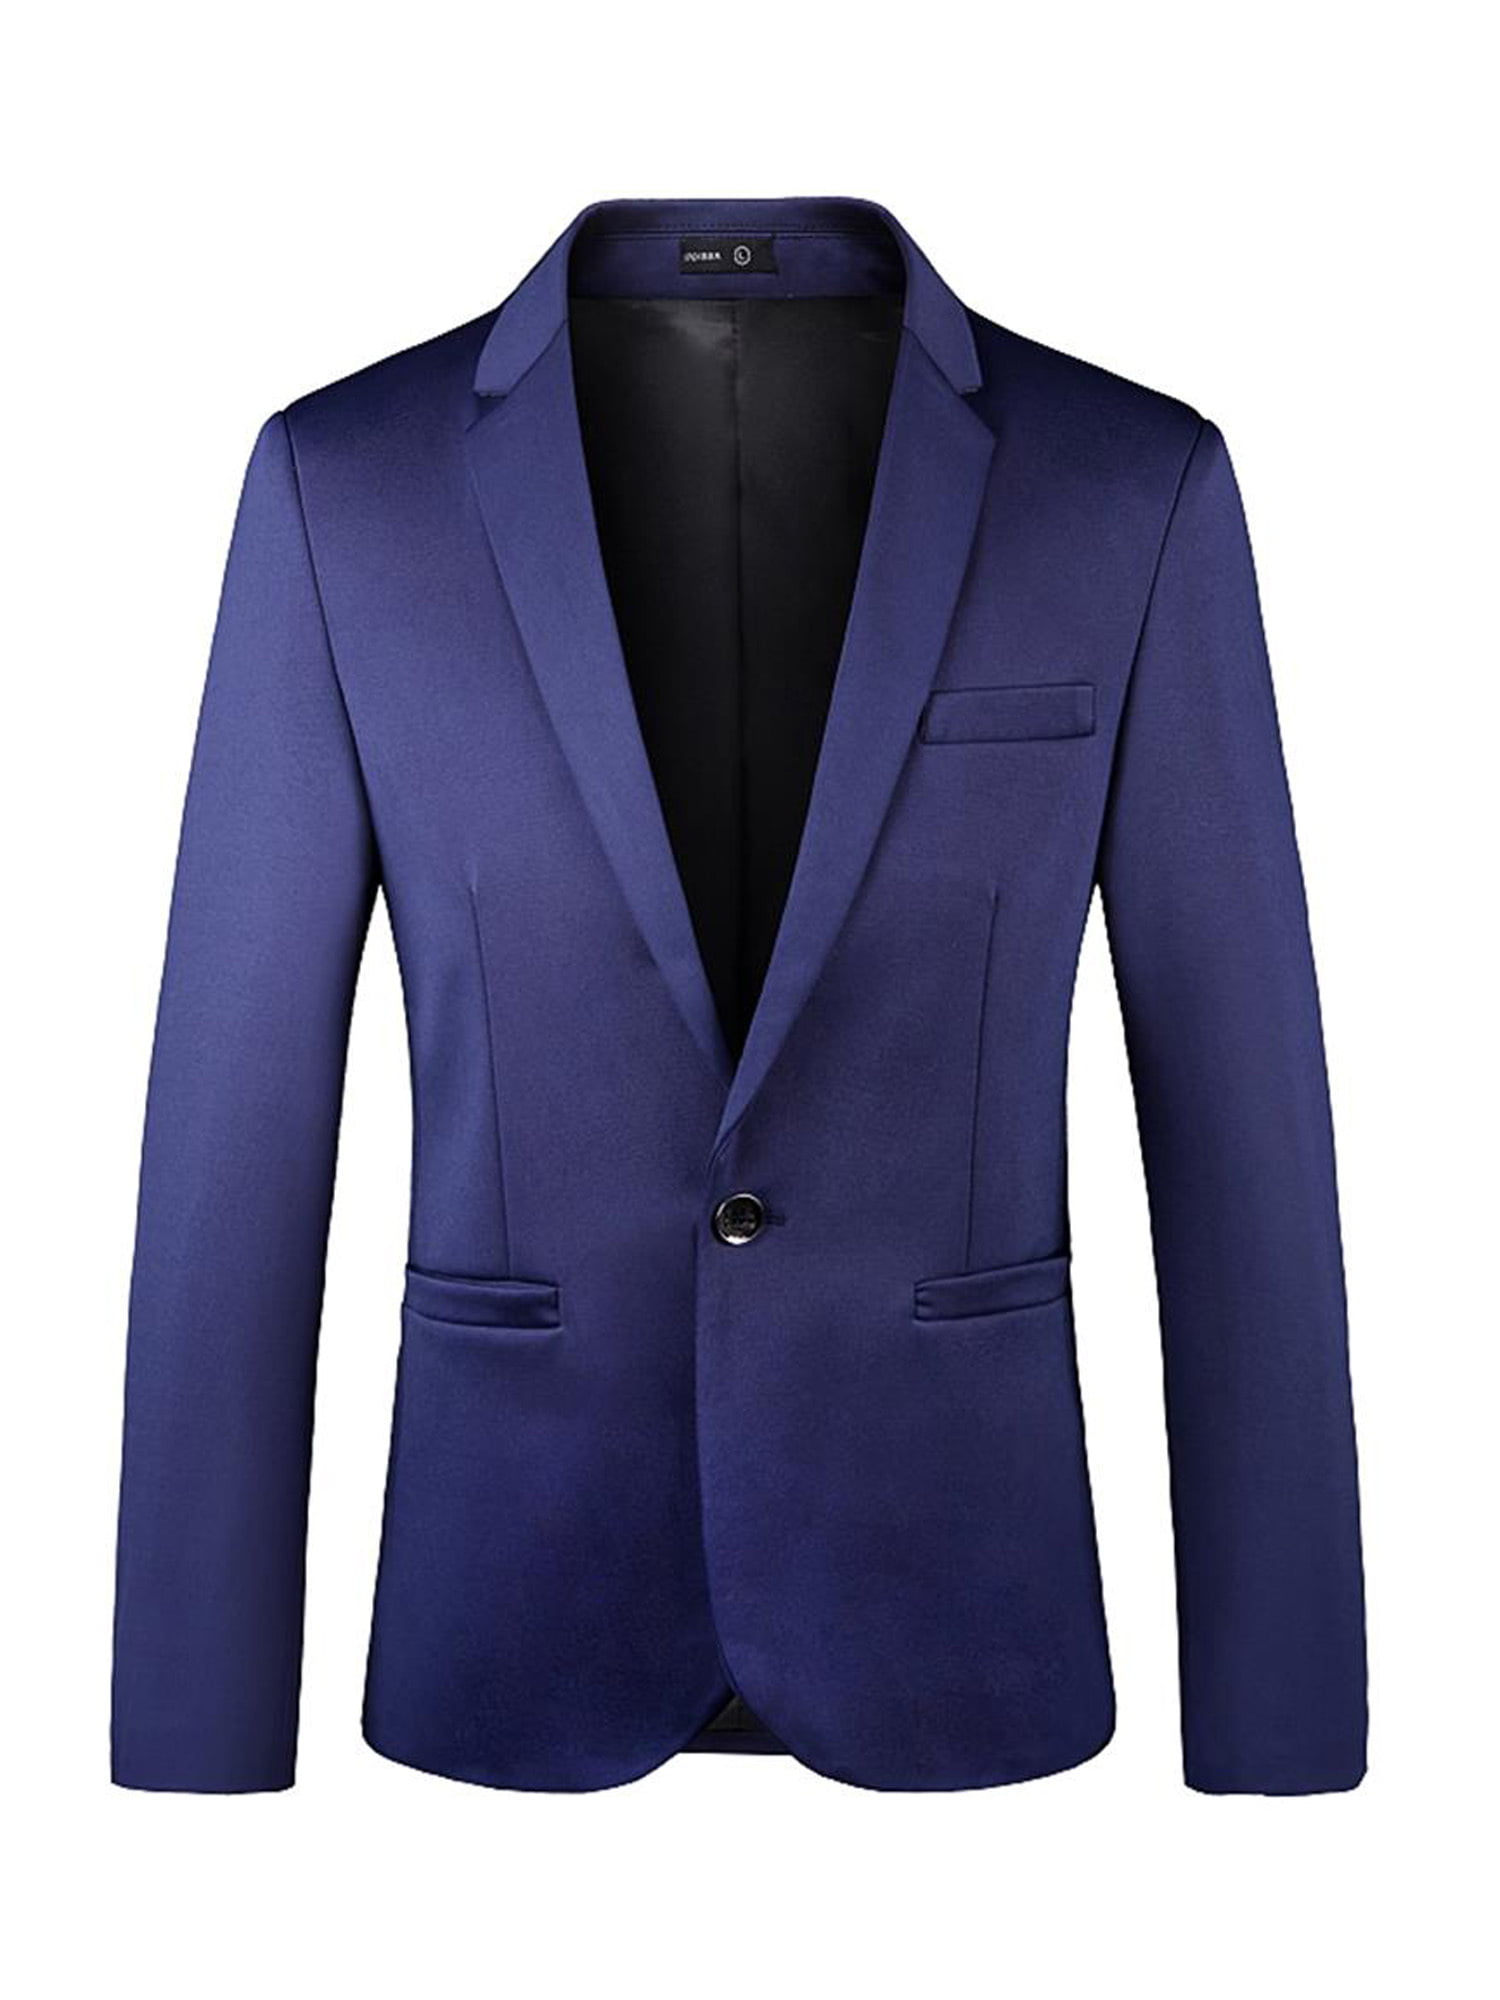 Men Office Work Slim Fit Long Sleeve Formal Suit Coat Jacket Blazer Solid Tuxedo